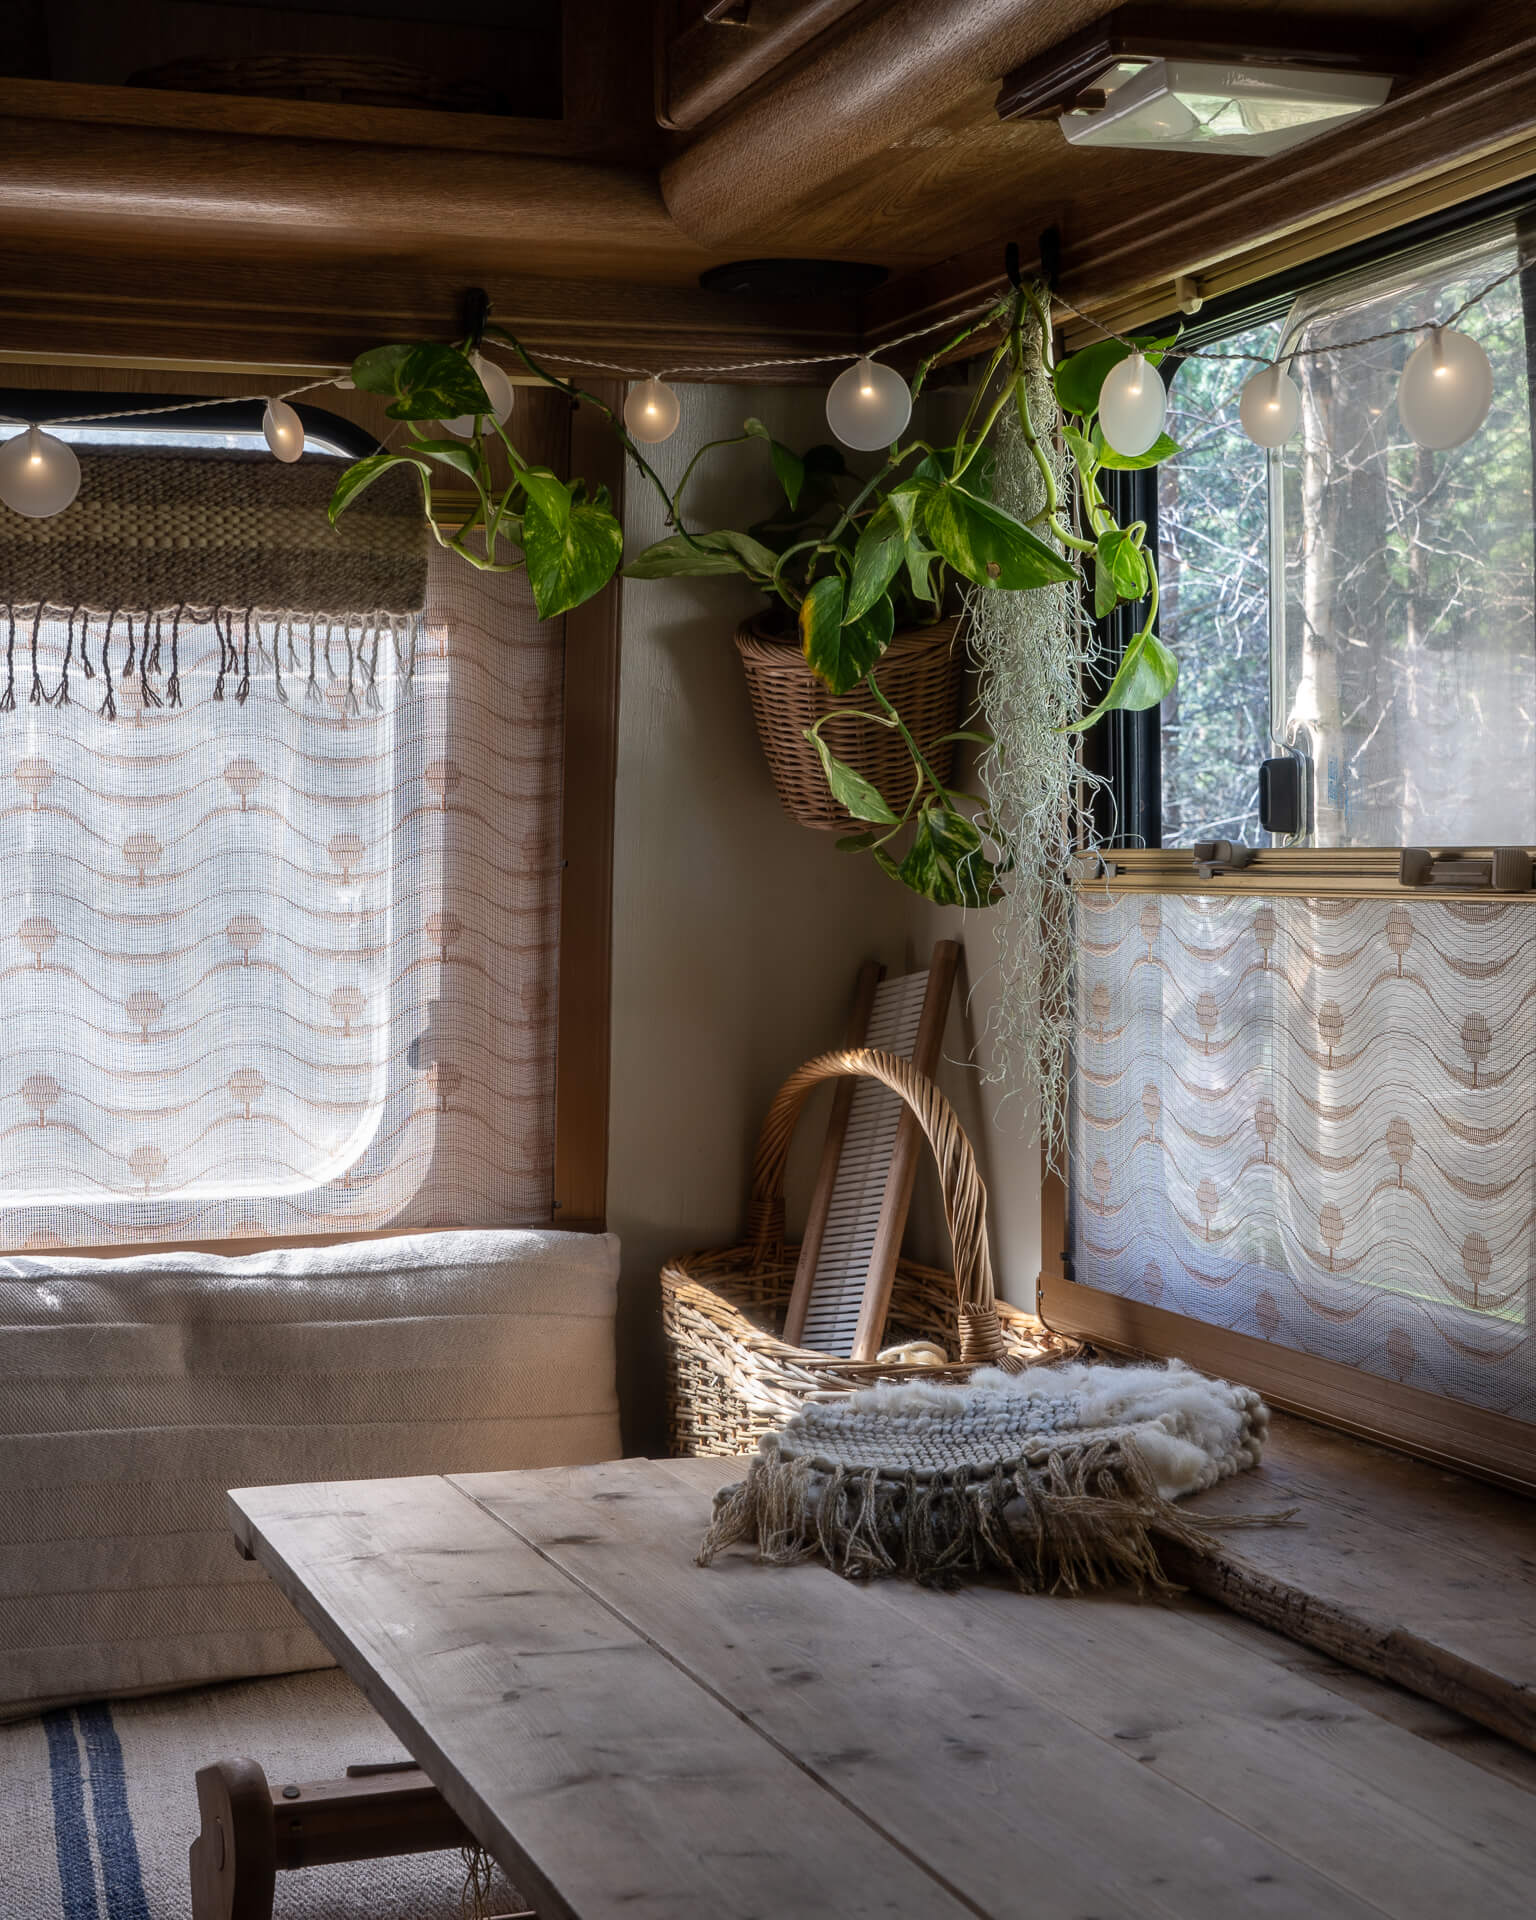 interior of camper van decorated with natural materials